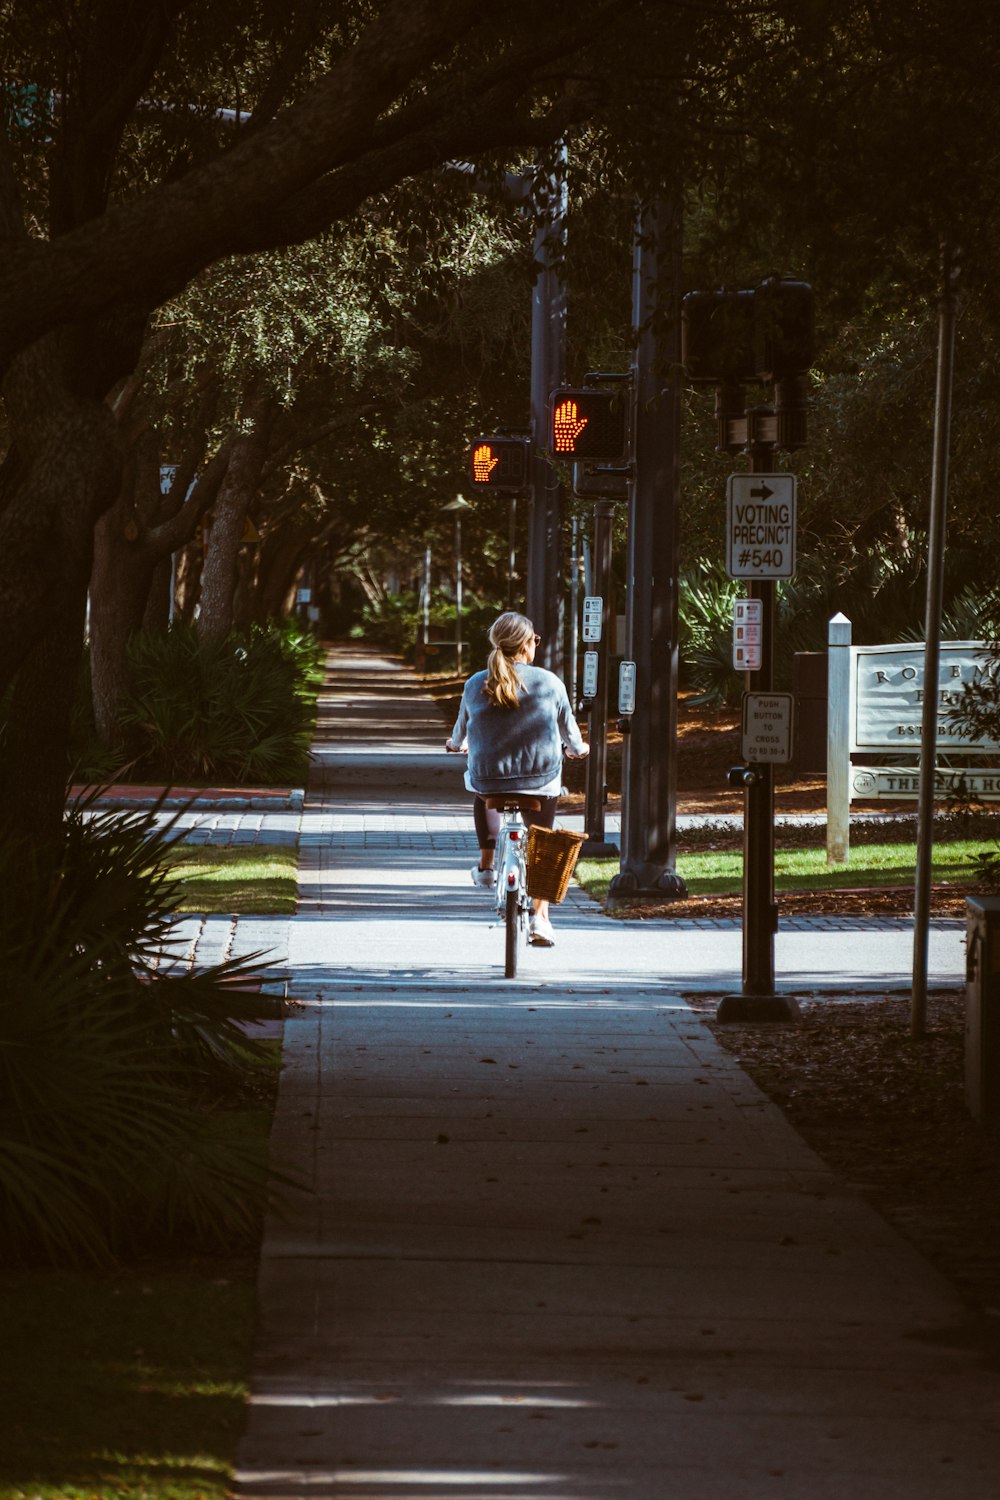 woman riding bike on sidewalk near trees and traffic lights